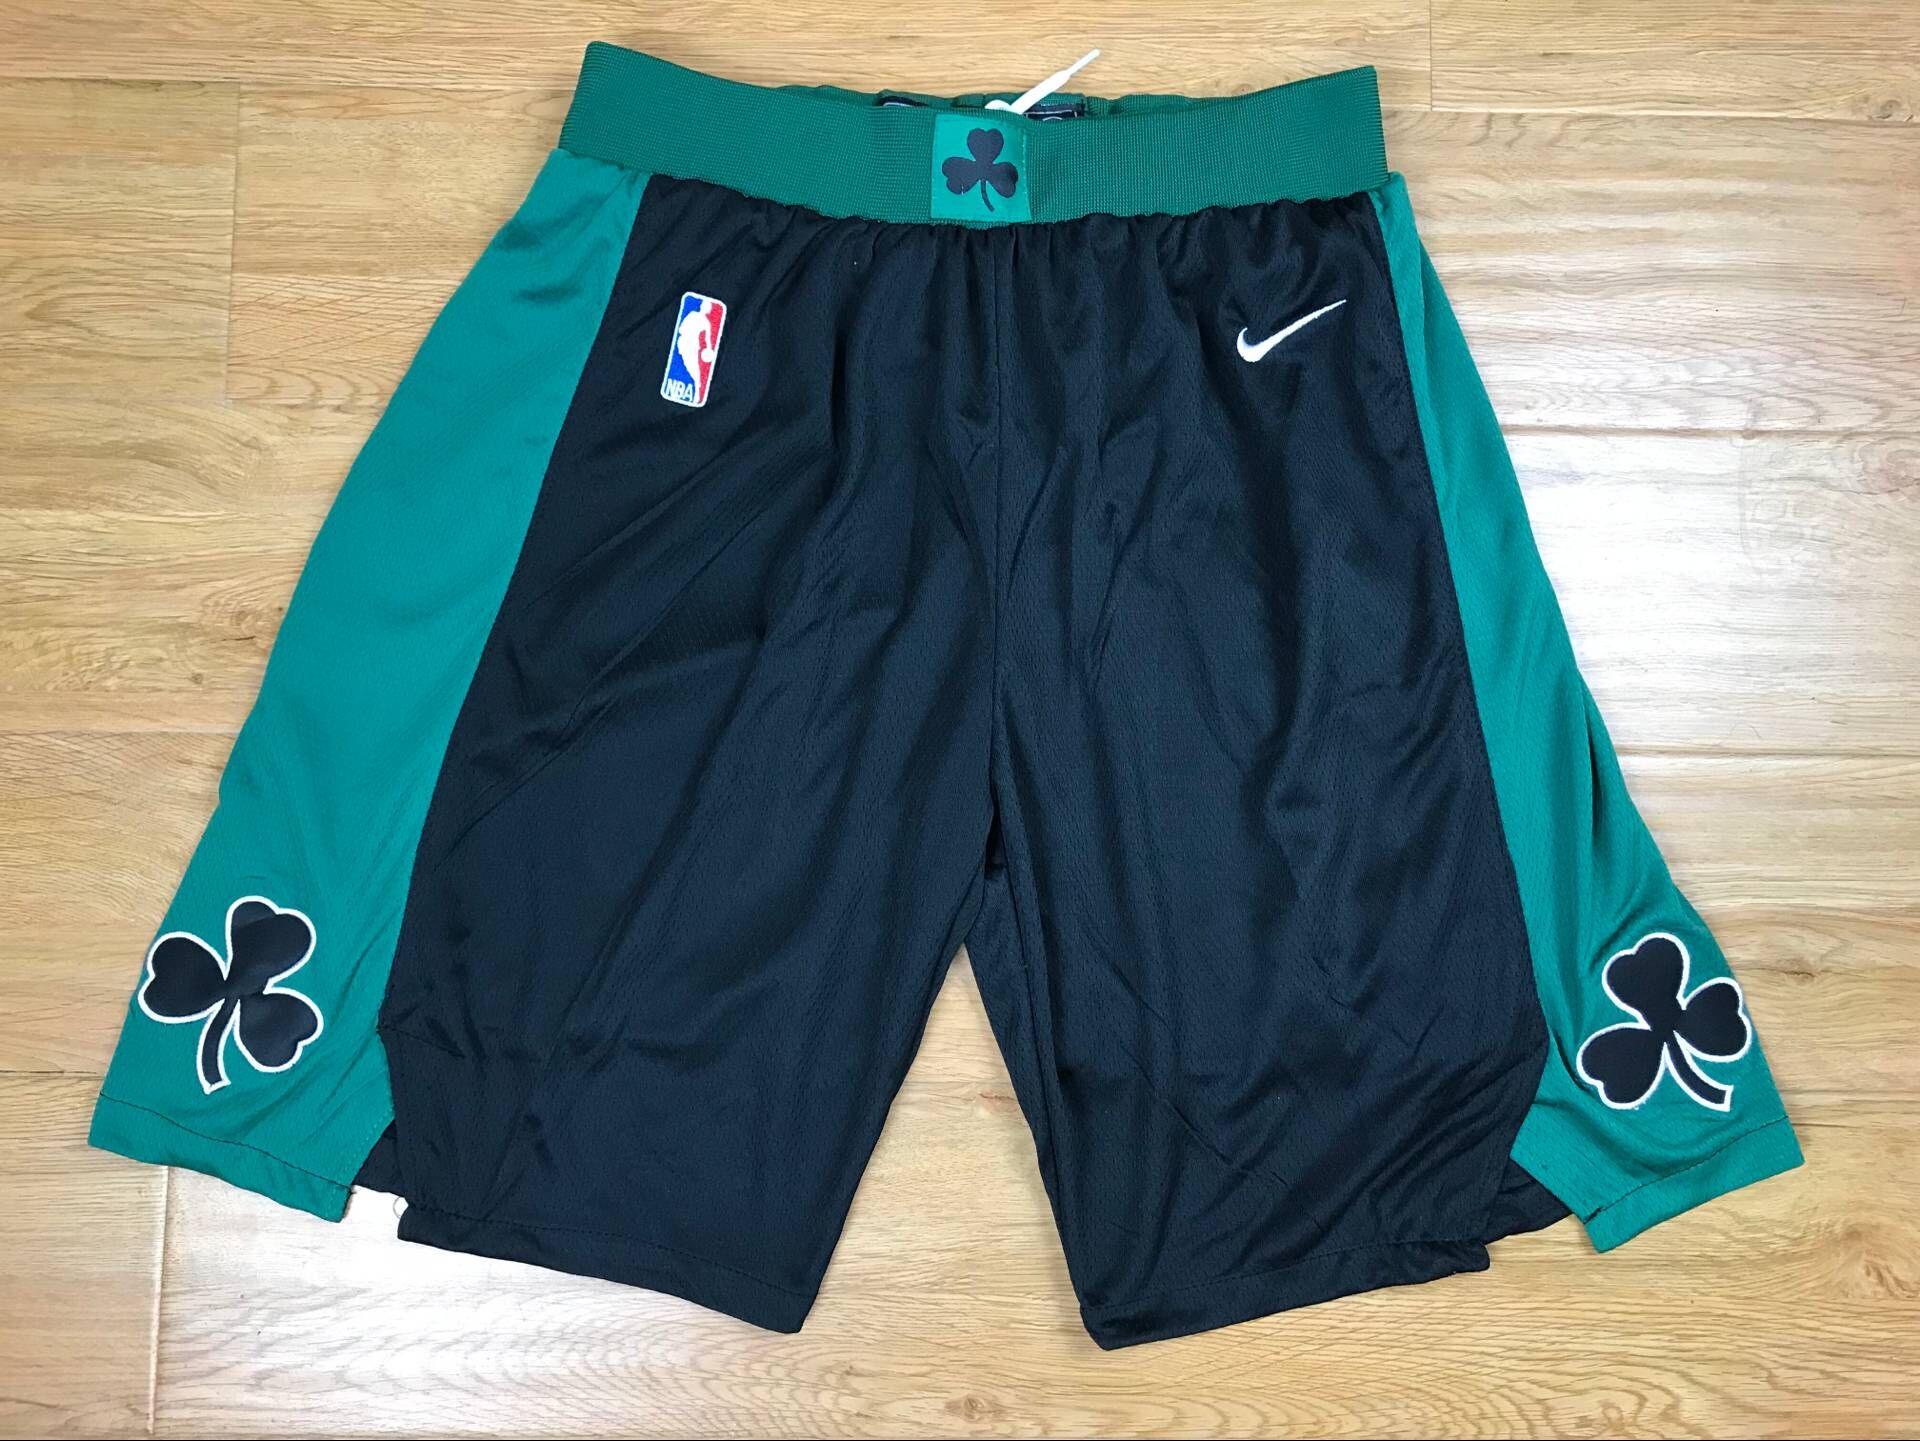 Celtics Black Nike Authentic Shorts